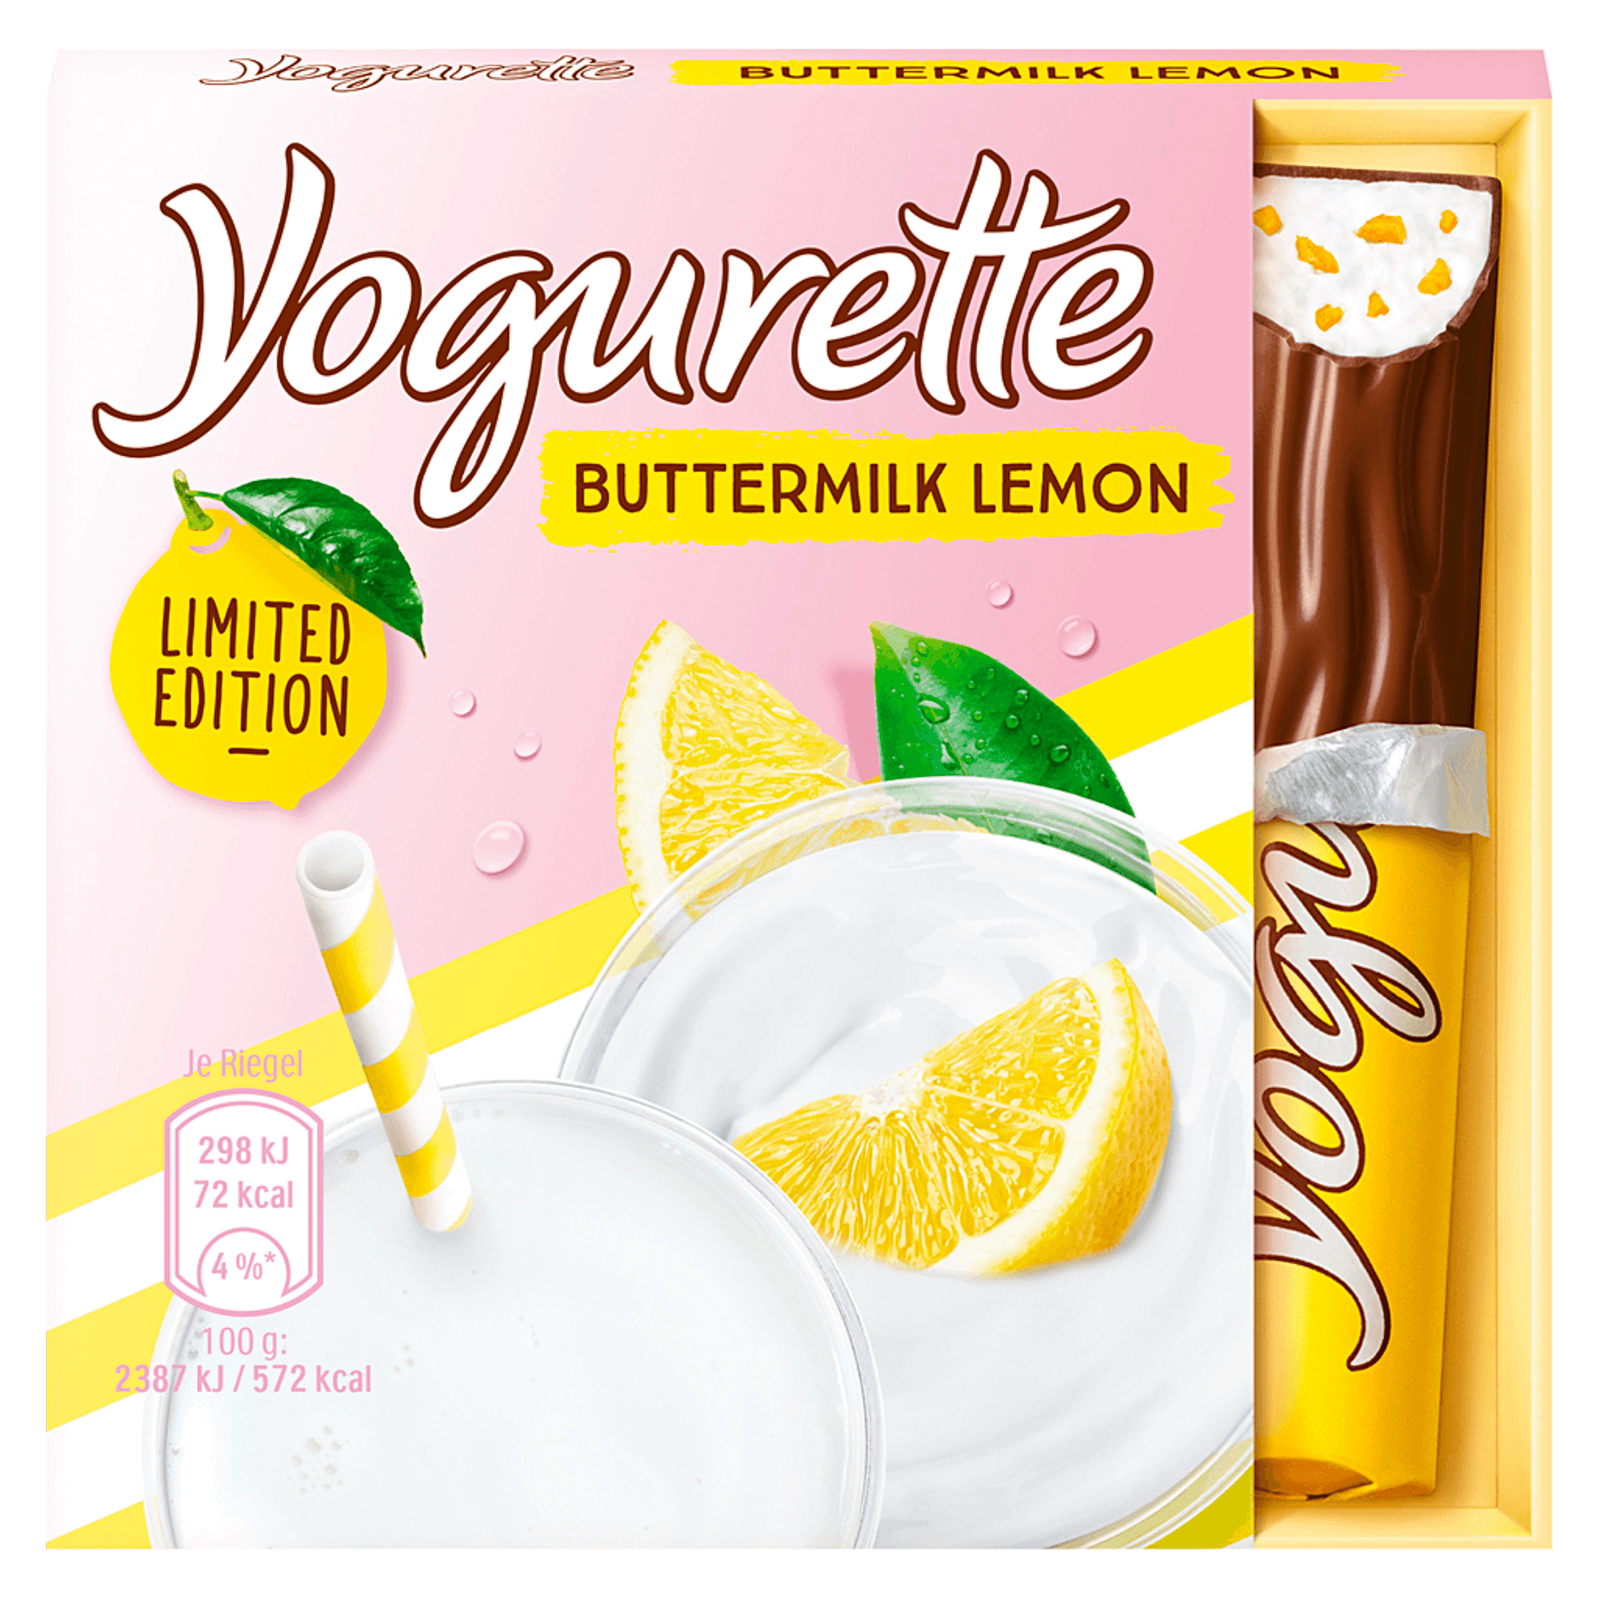 REWE Yogurette 50g Buttermilk online bei Lemon bestellen!